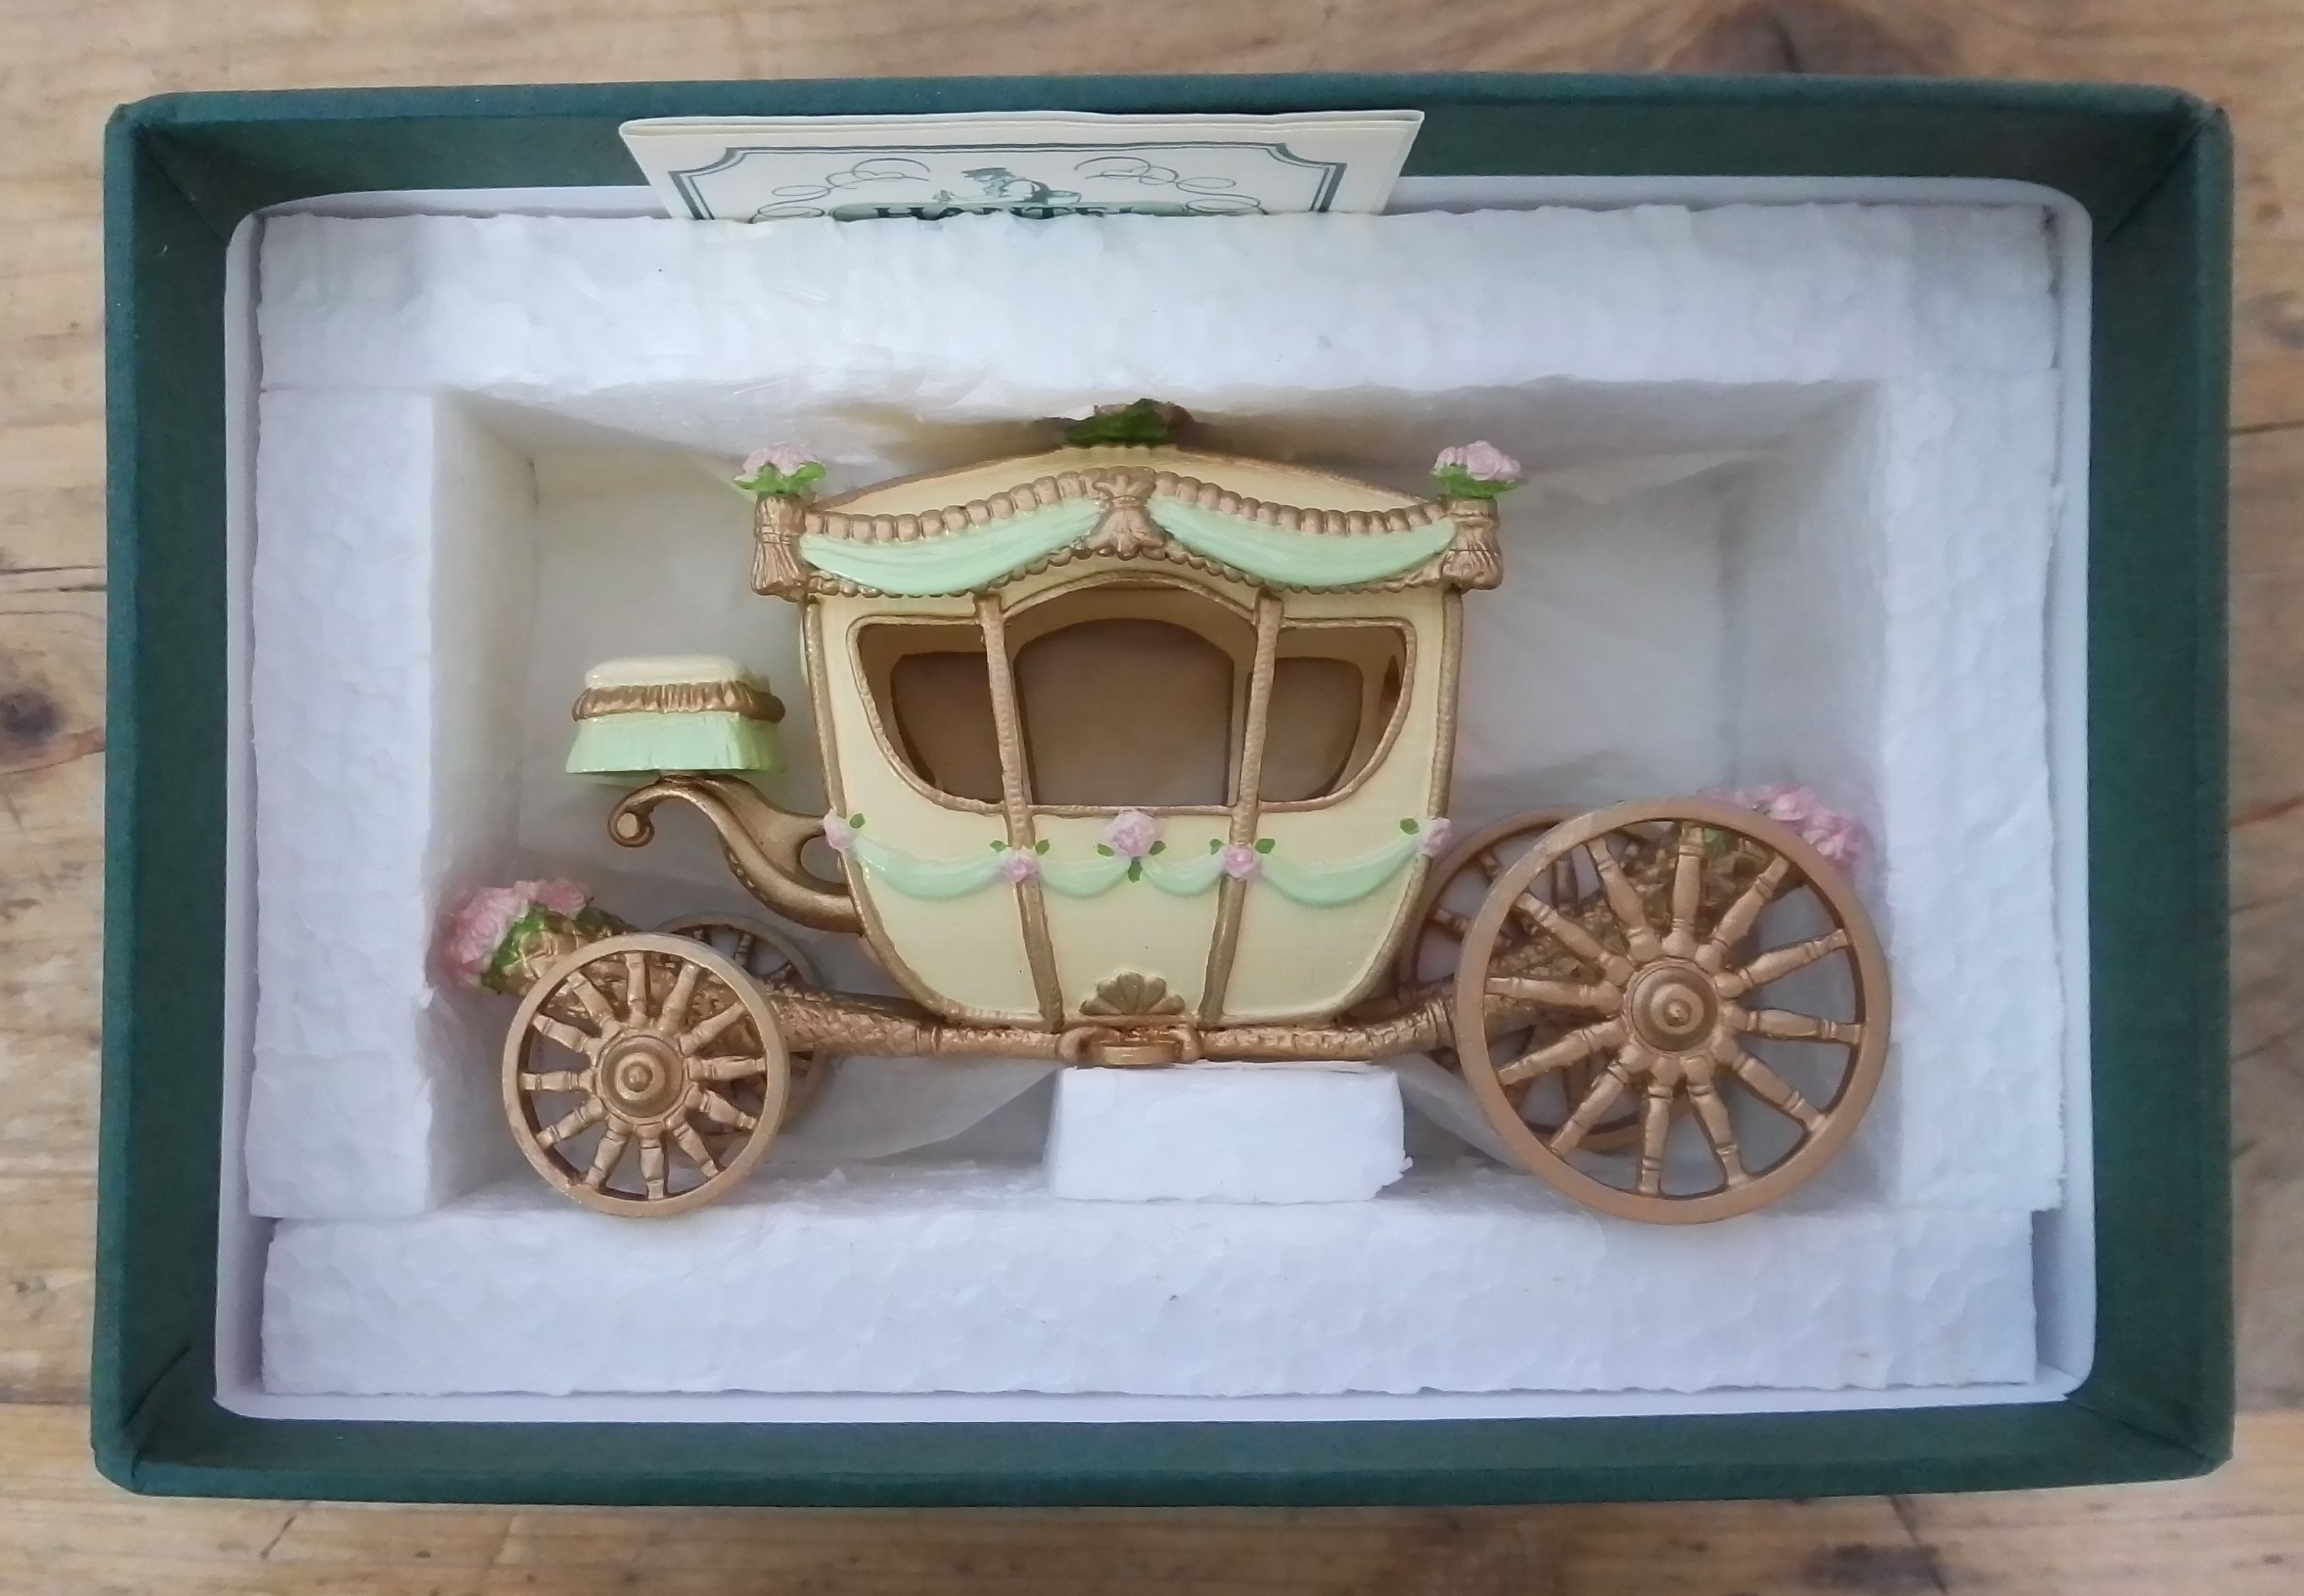 A Hantel Victorian Miniature Cinderella's Coach, boxed with certificate.